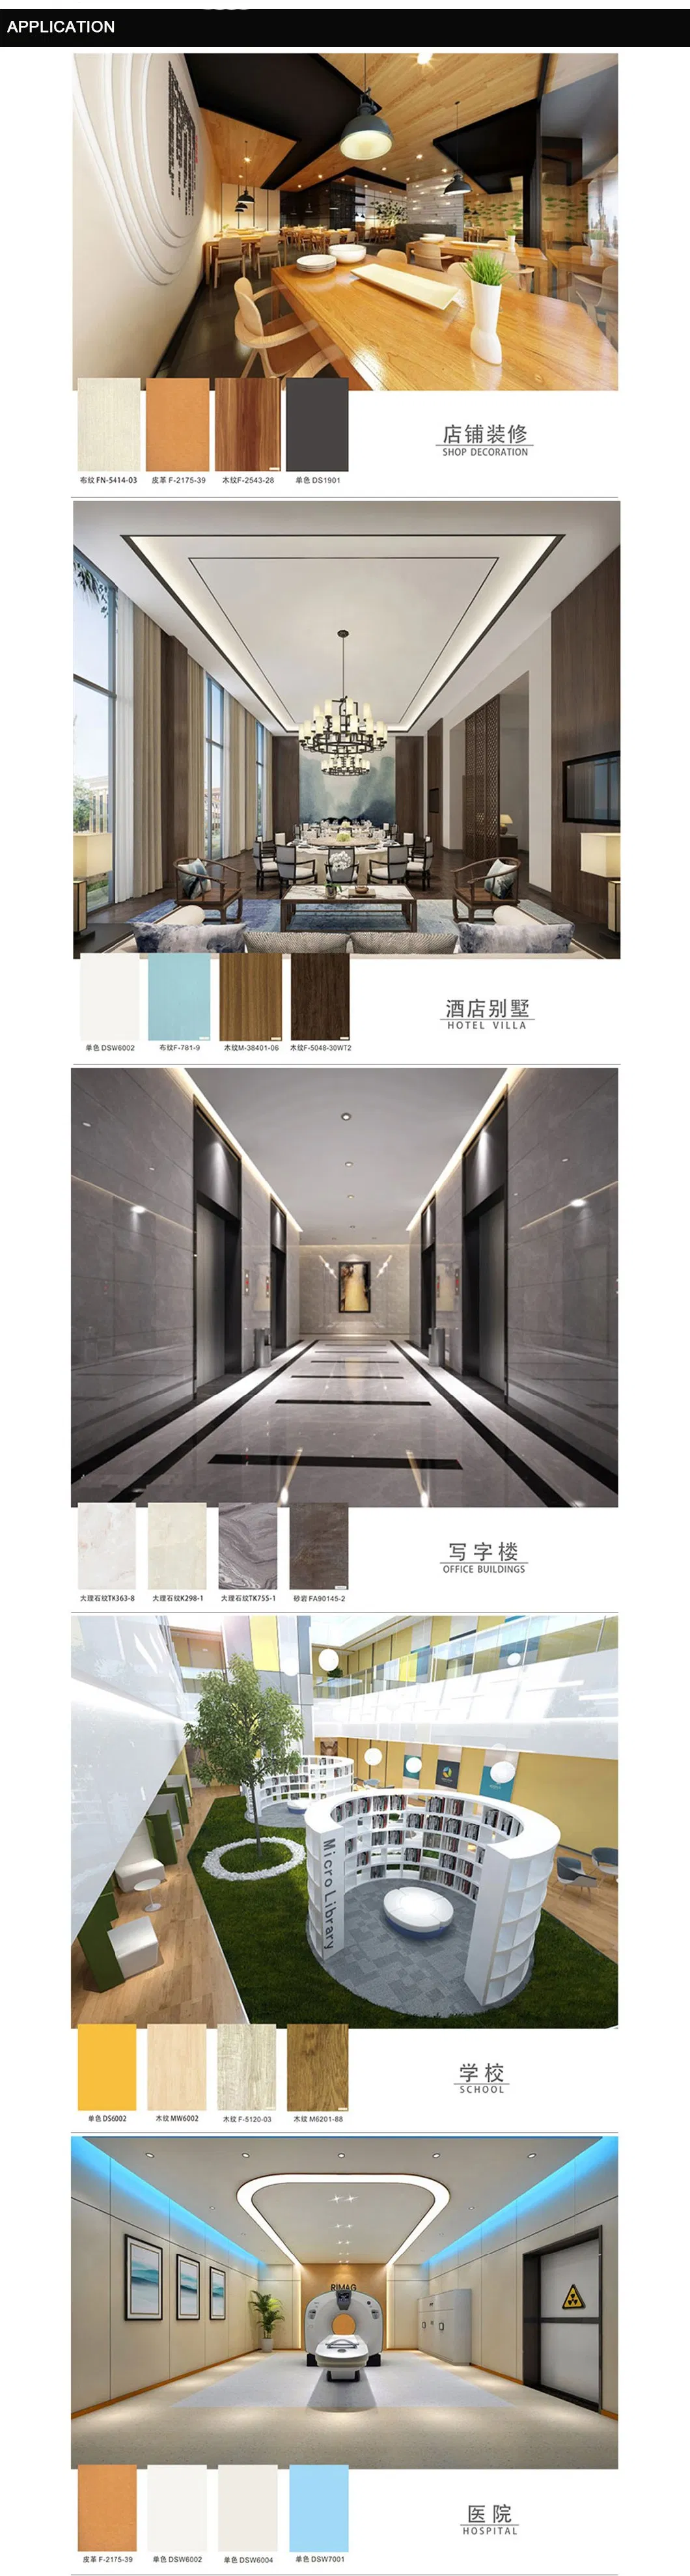 4*8 Feet High Bending Strength Superior Quality PVC UV Marble Sheet Wall Panel